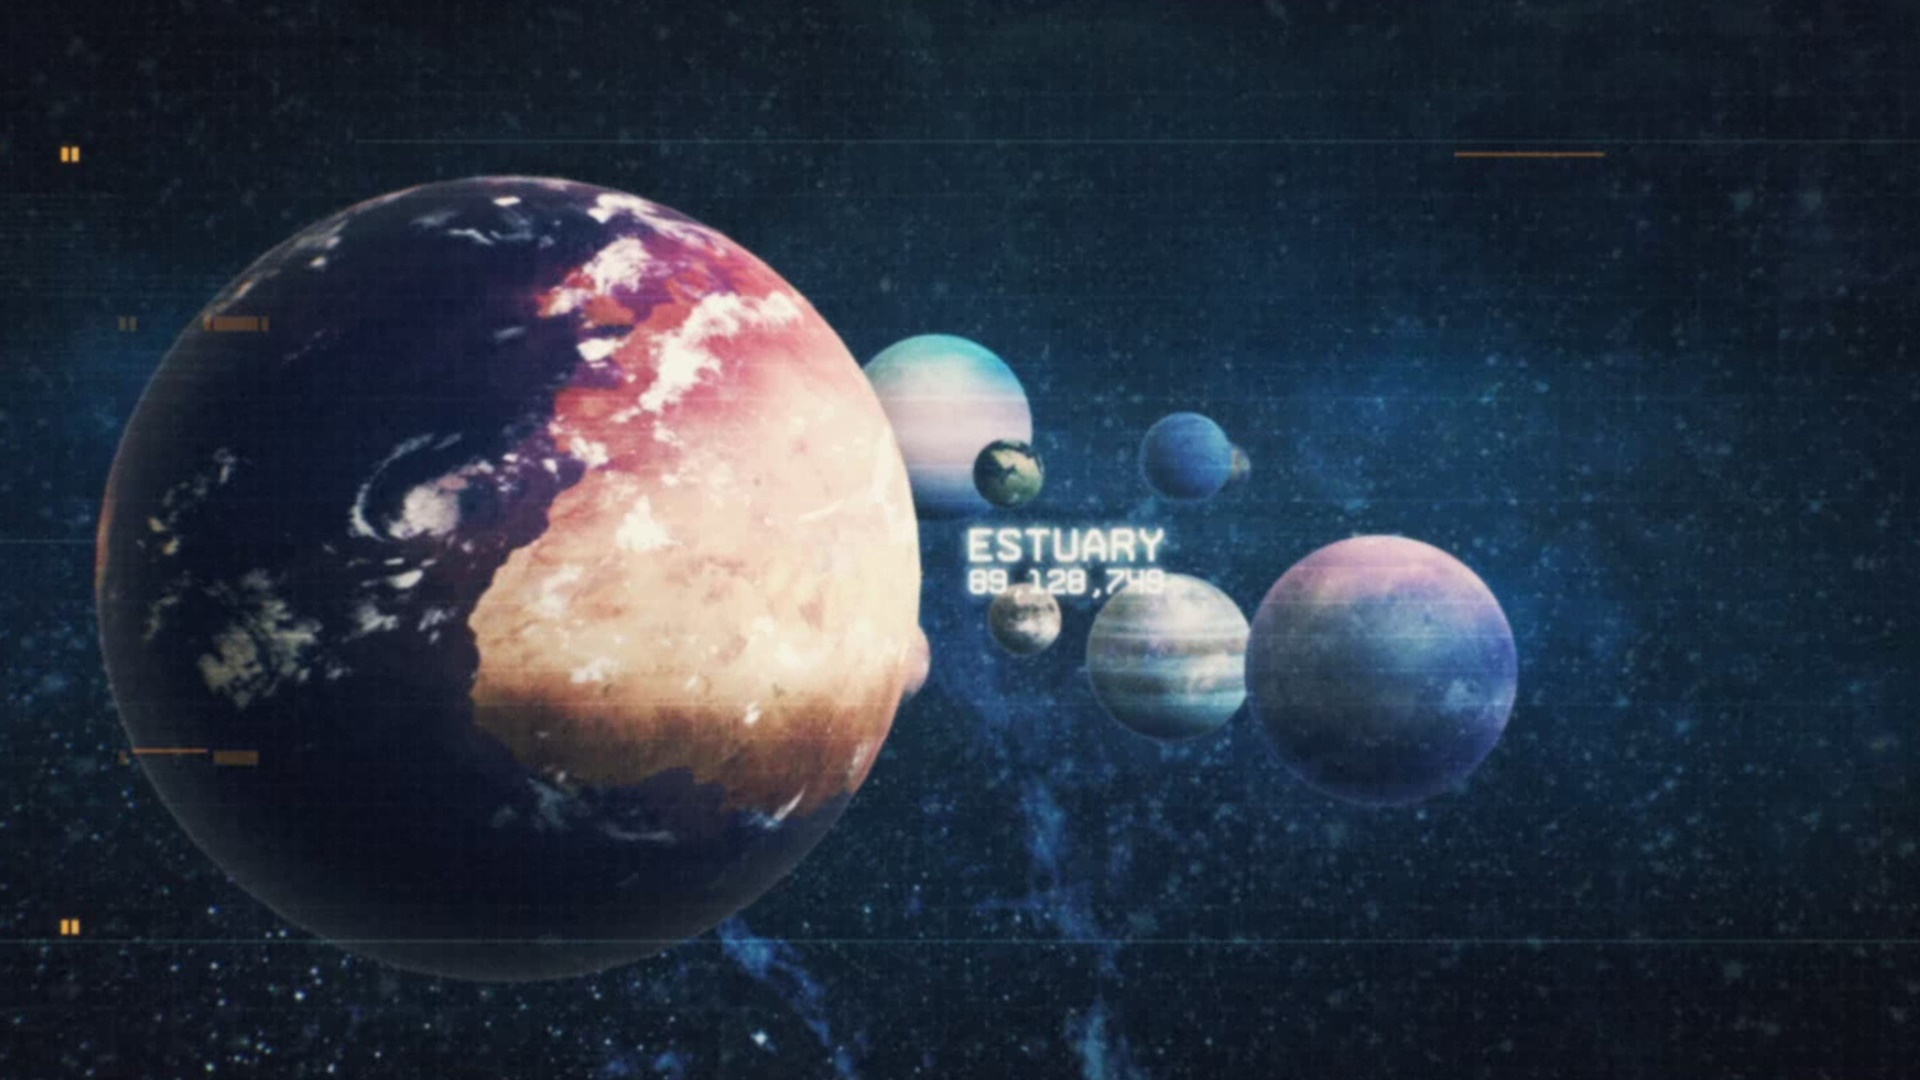 Halo 2: Anniversary Terminal screenshot of the colony world Estuary